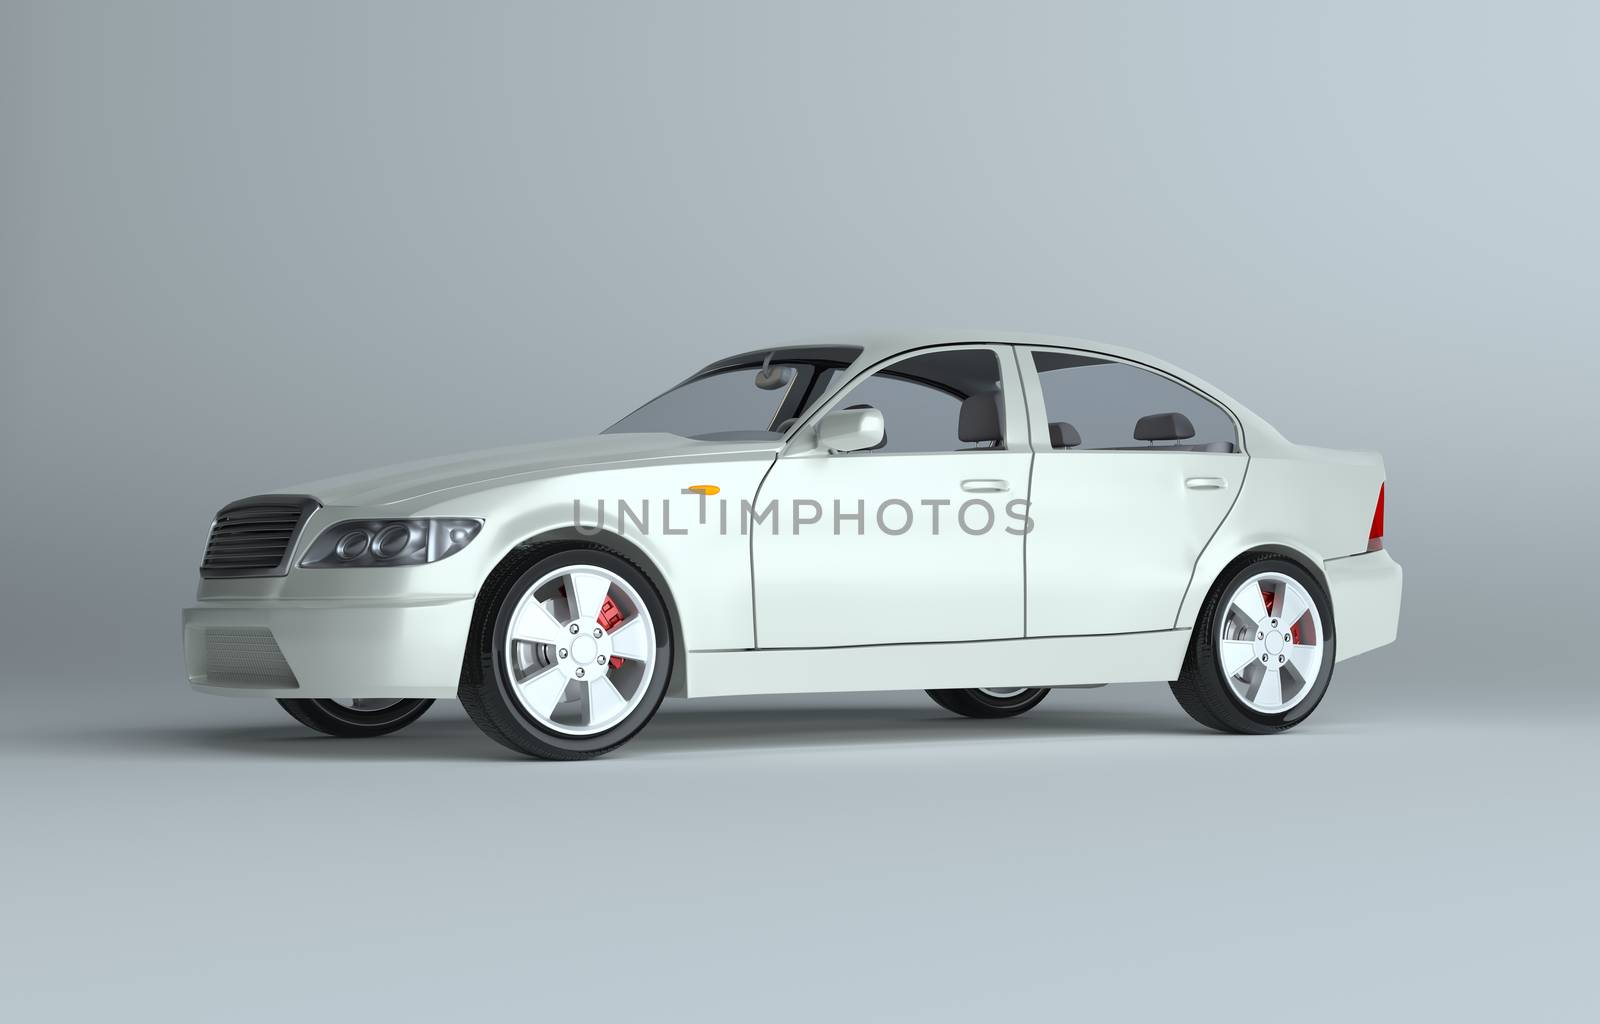 A CG render of a generic luxury sedan. 3d illustration